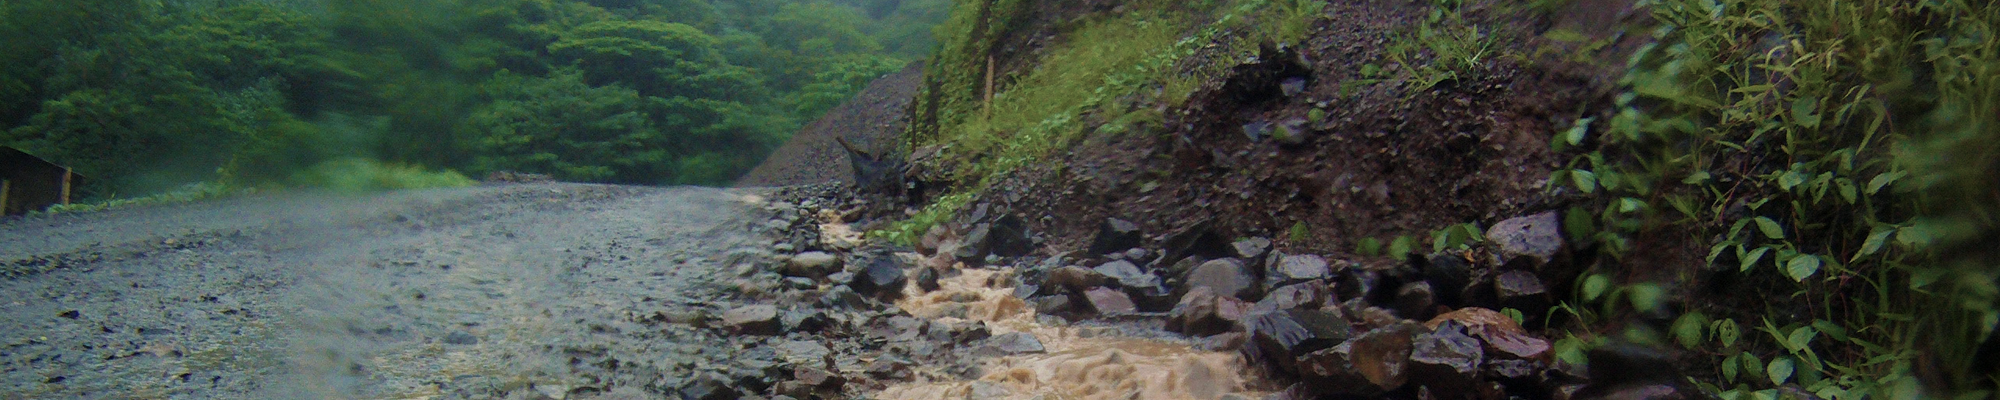 mountain road during rainstorm